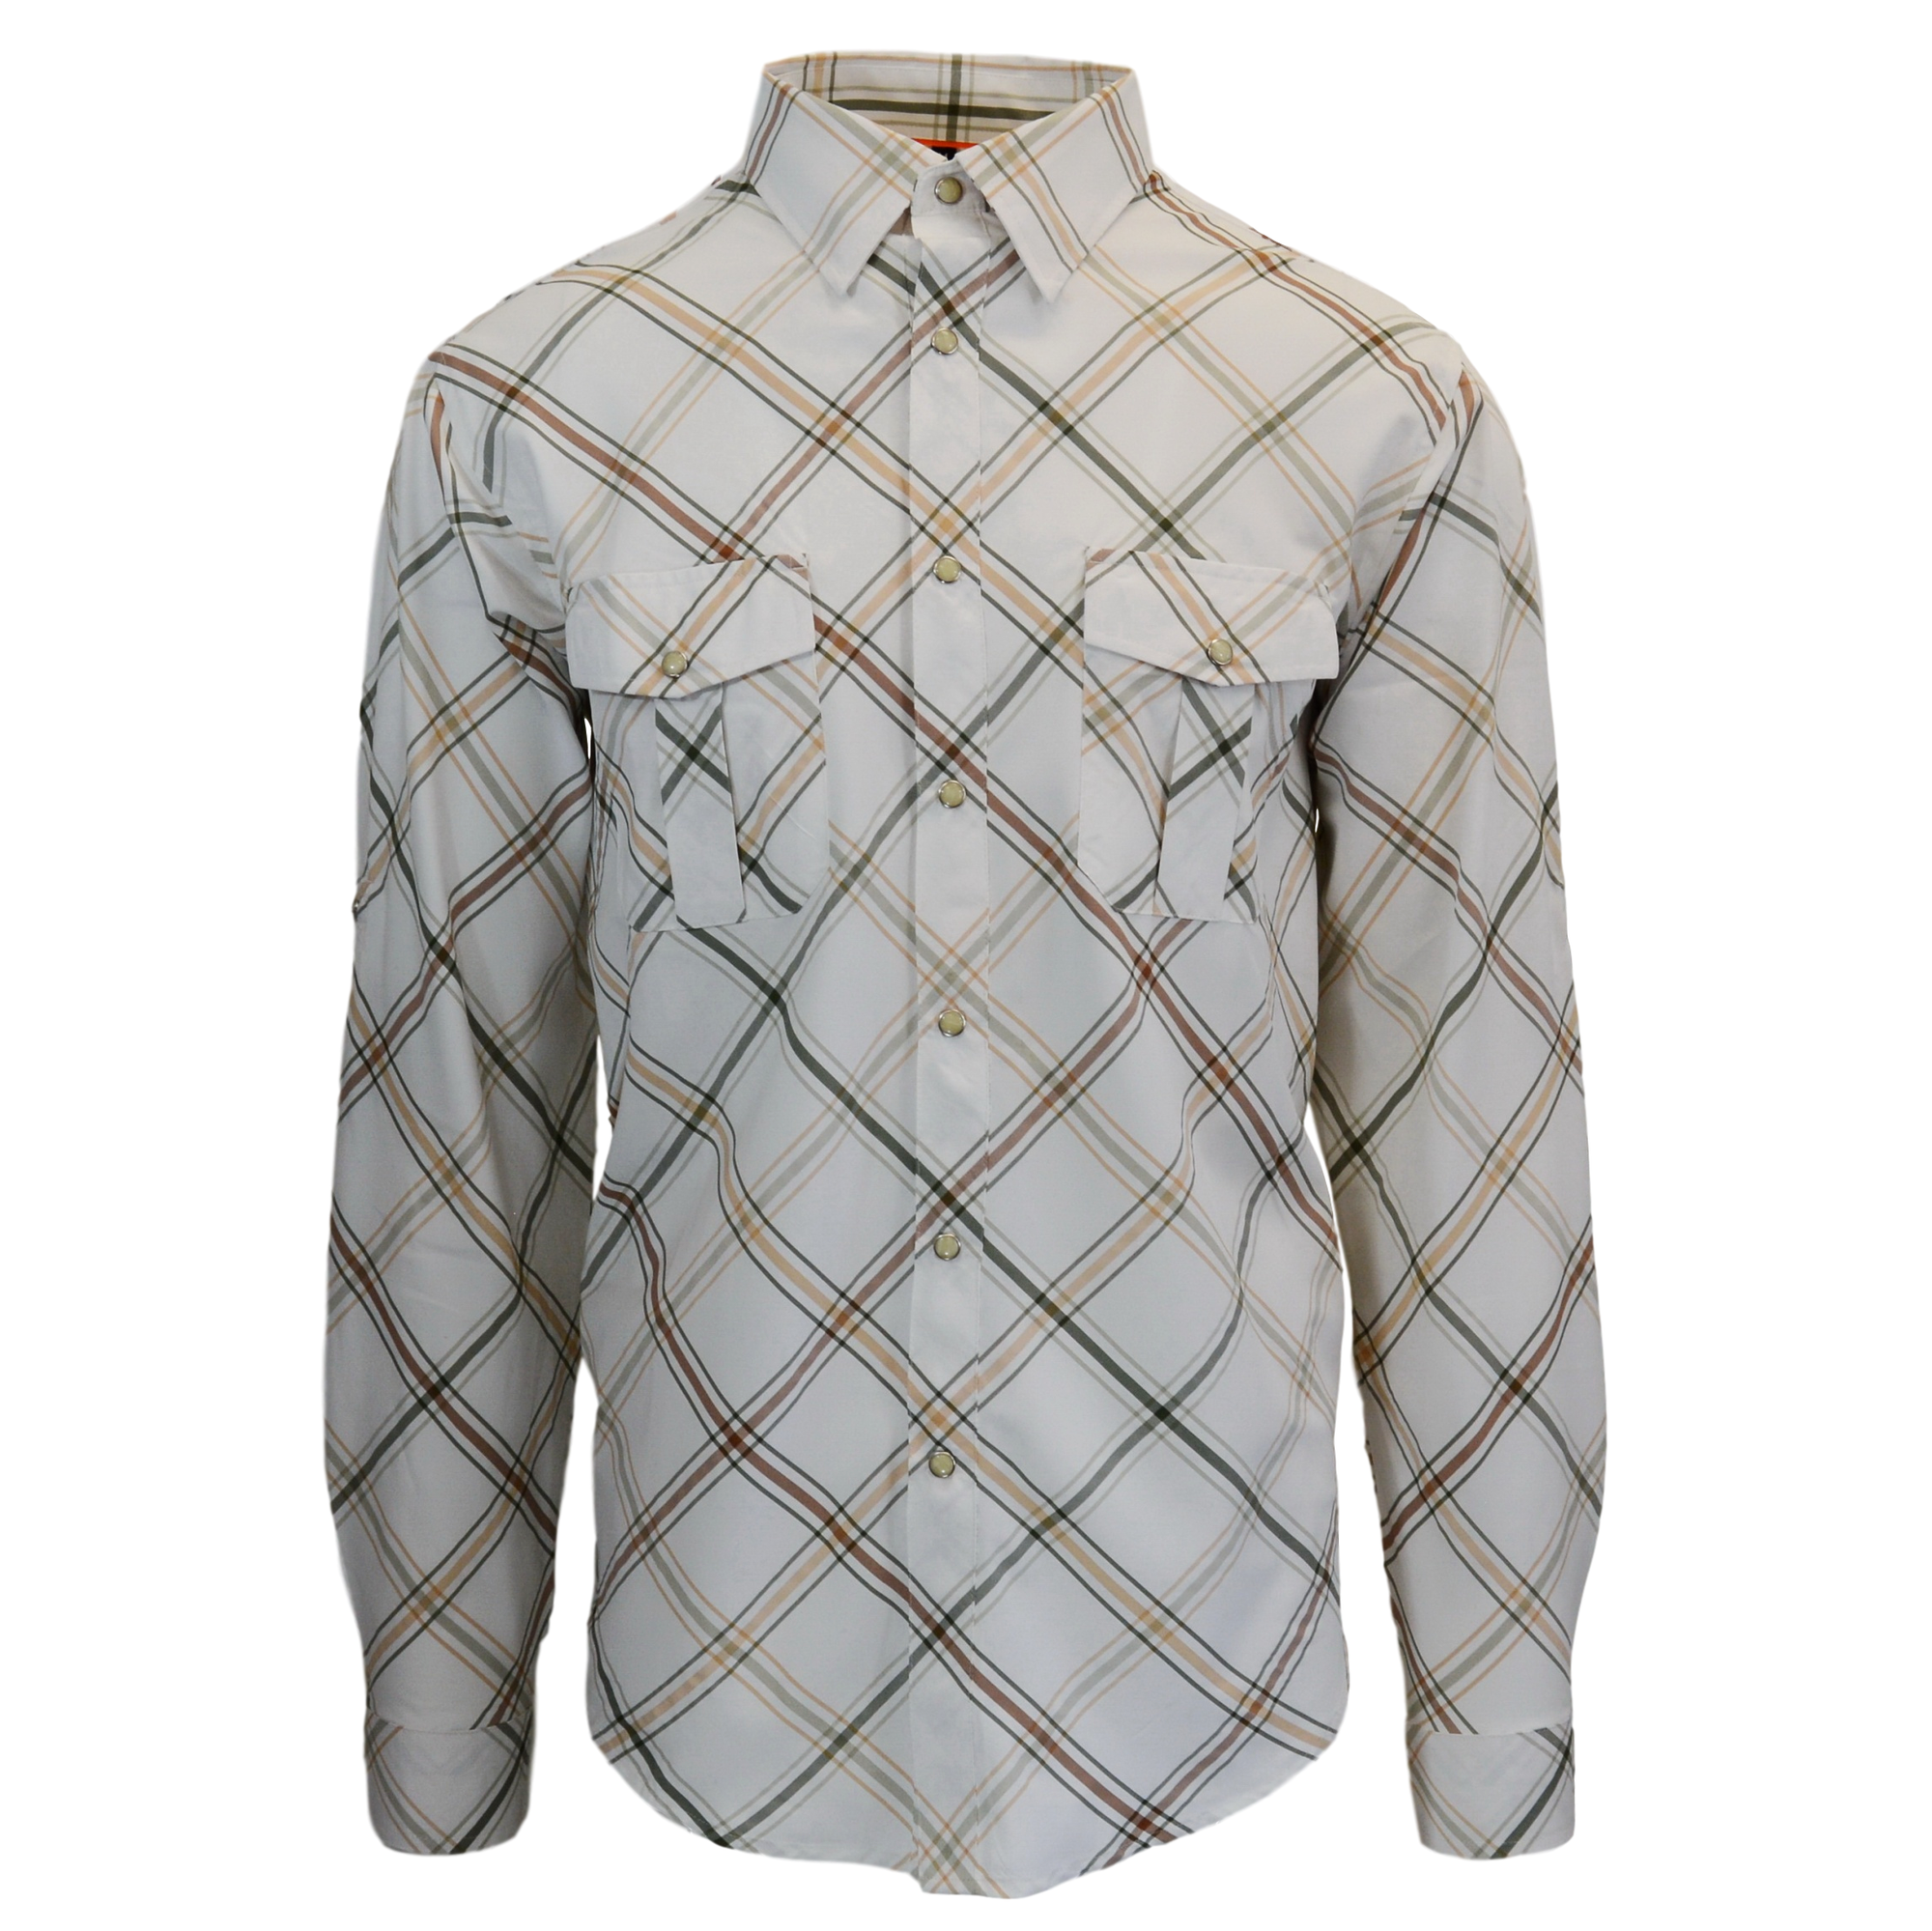 Backcountry plaid button down shirt